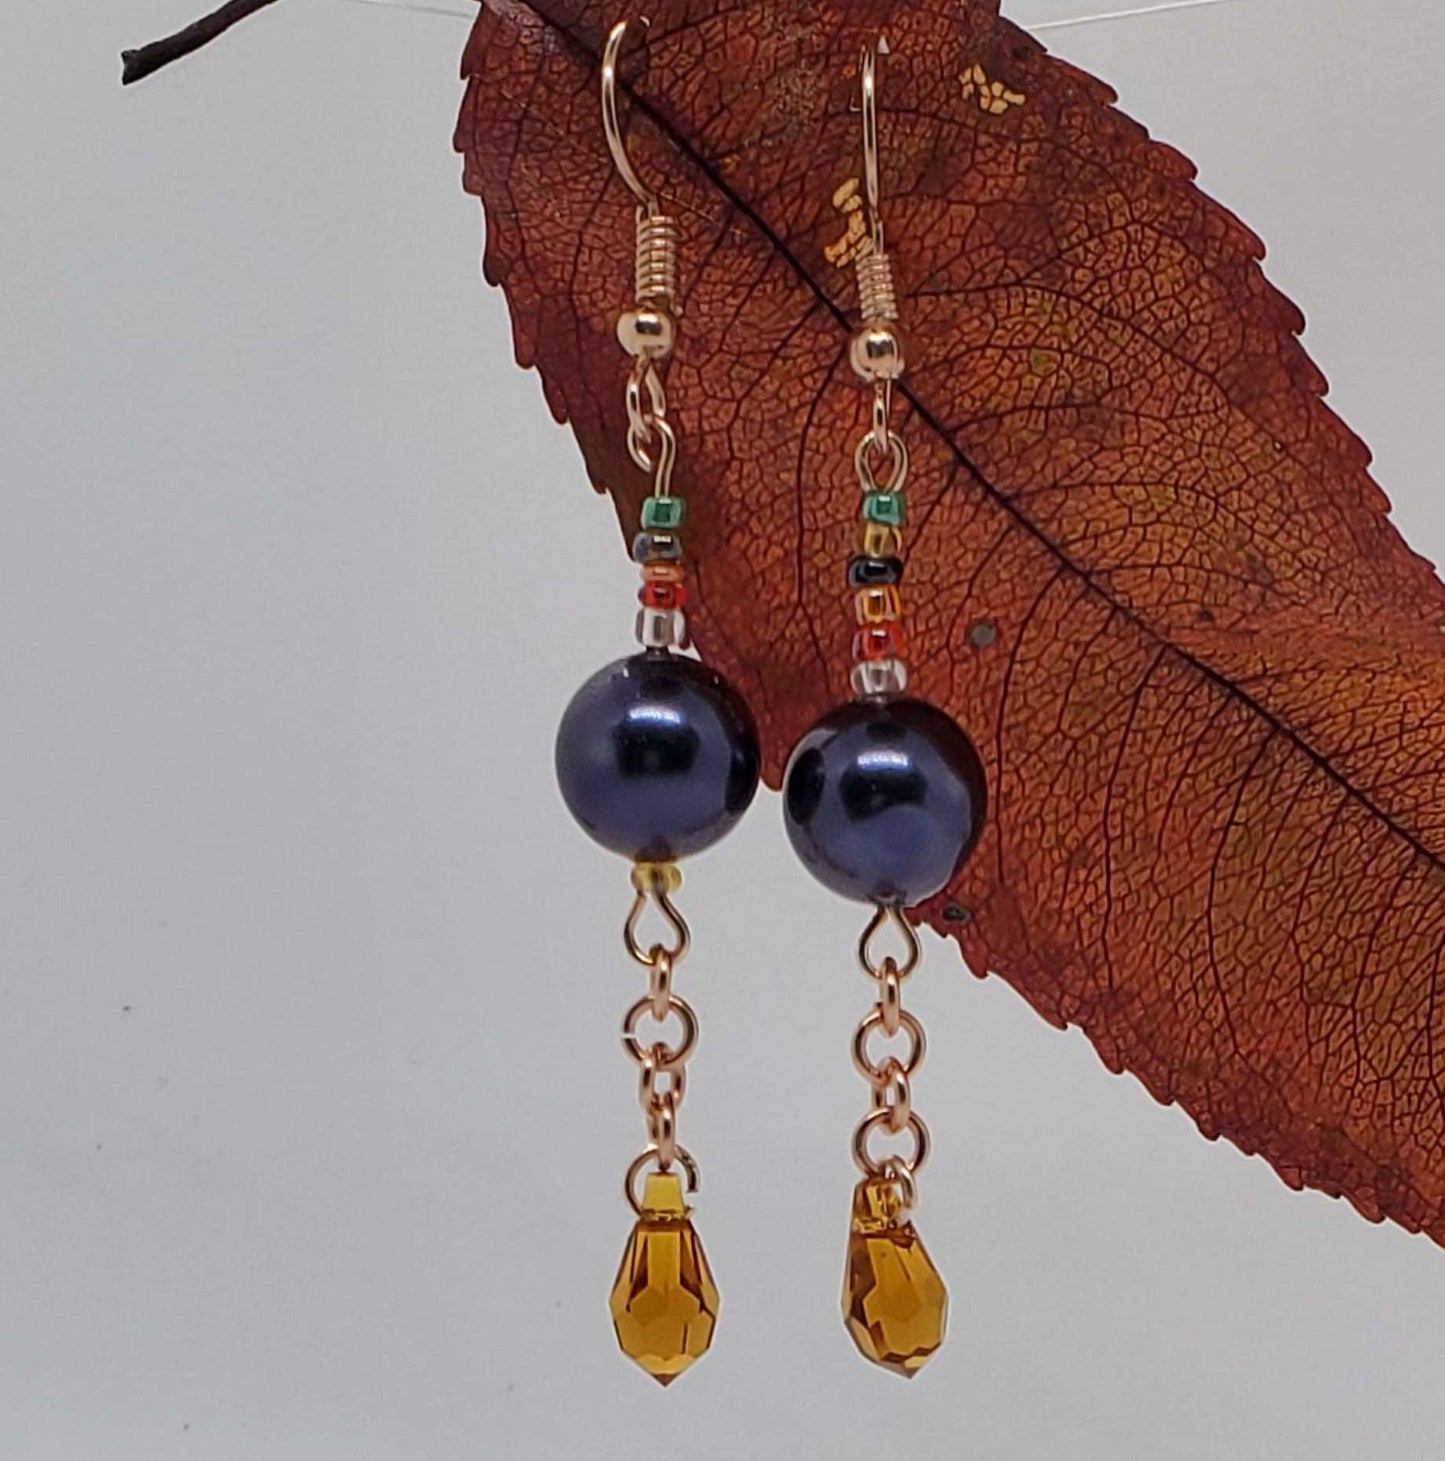 Earrings dangling from a leaf, Bisa Drop Earrings, earrings by Jiana Deon